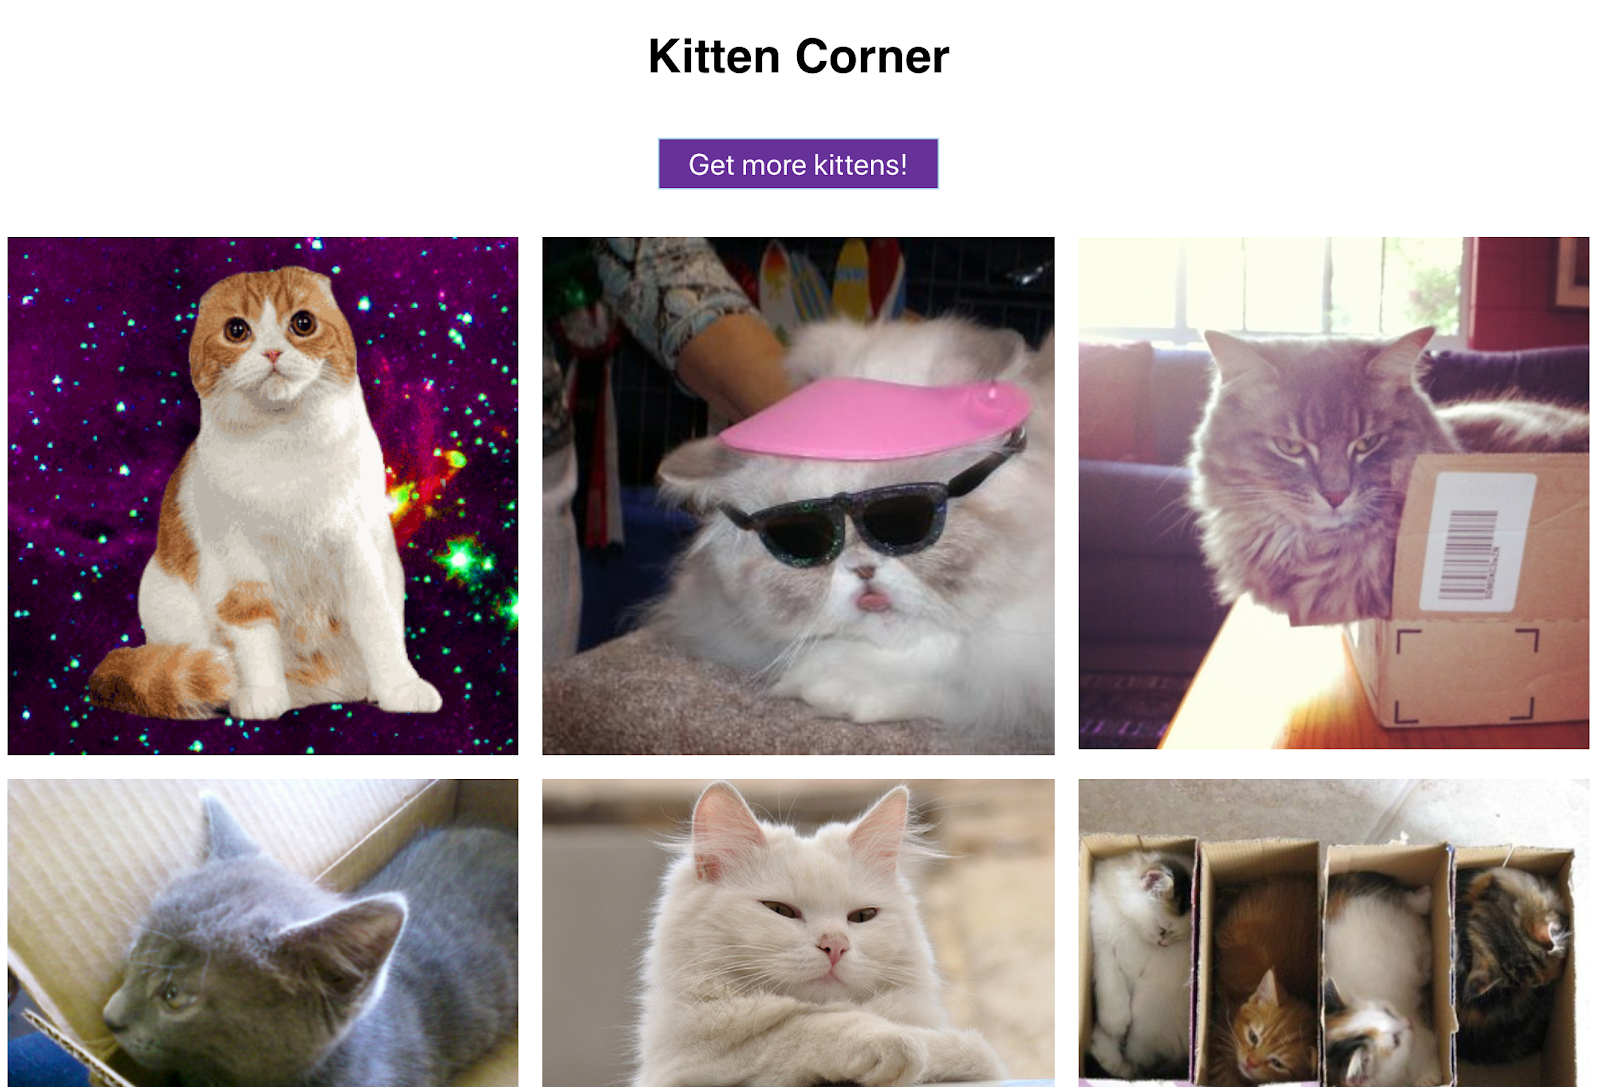 Gambar kucing lucu dalam petak dan tombol untuk menampilkan gambar lainnya - aplikasi web ini benar-benar lengkap!